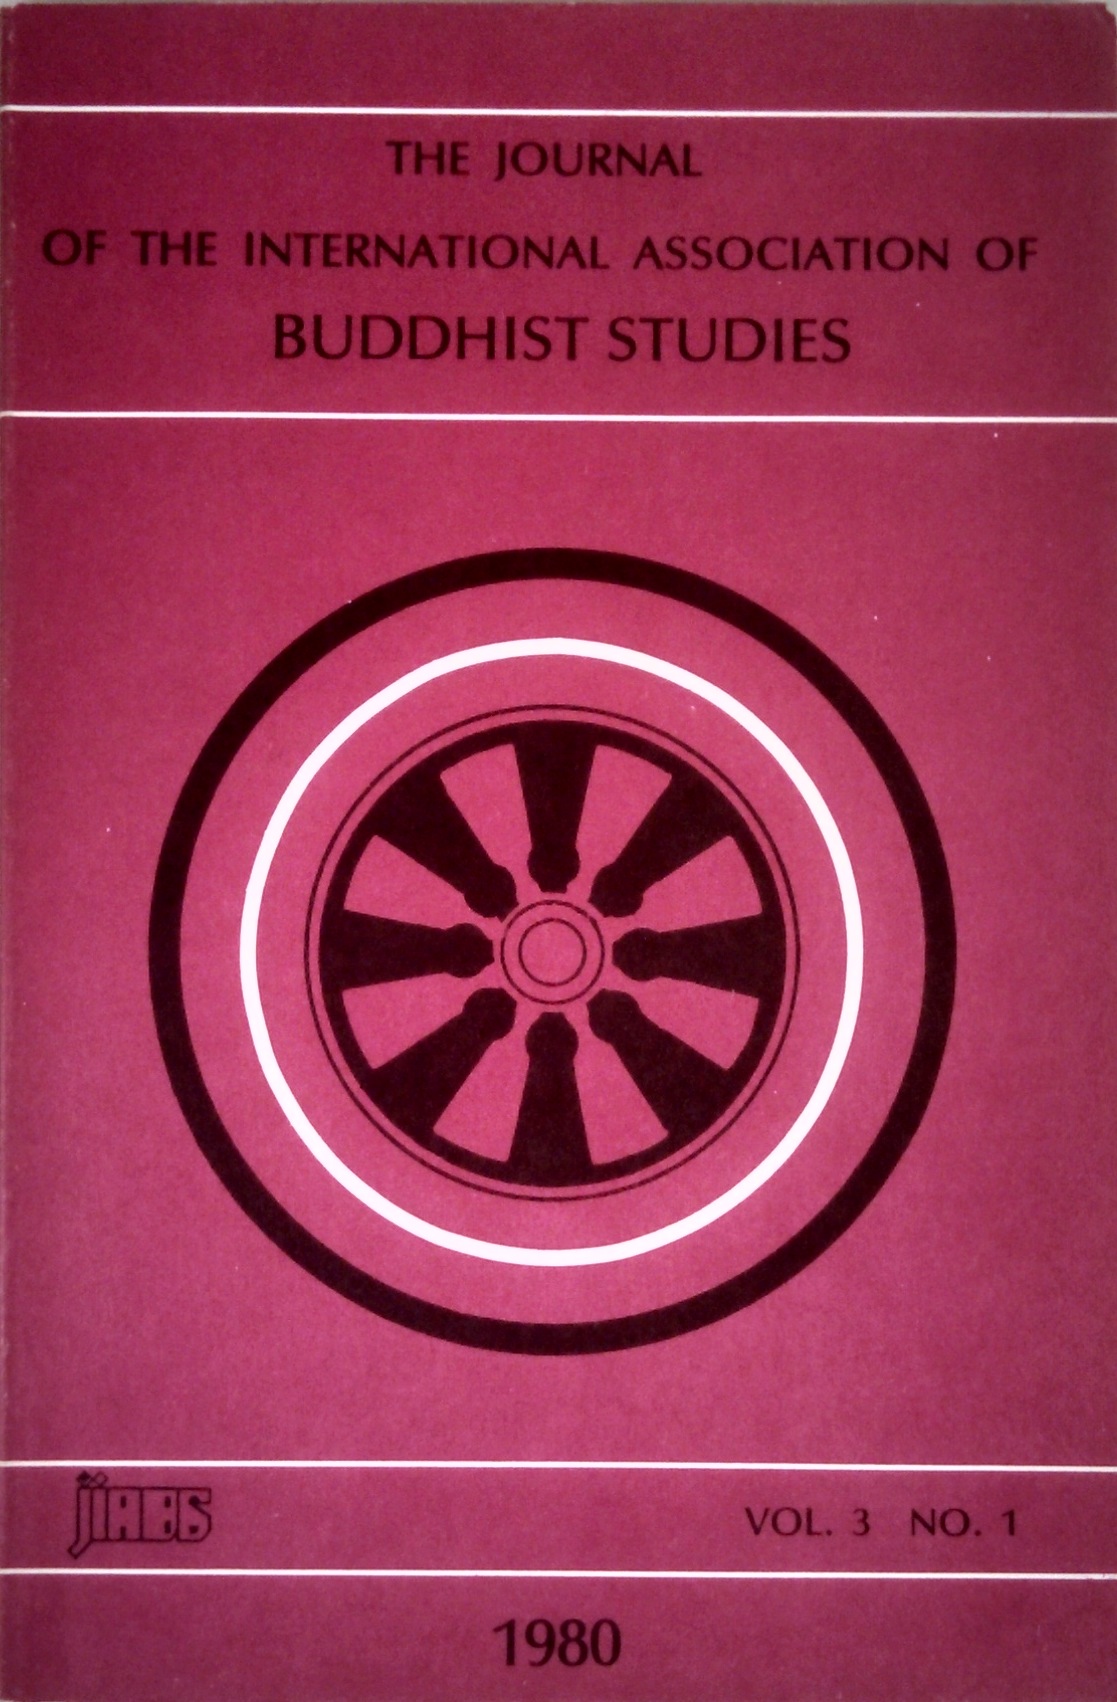 Journal of the International Association of Buddhist Studies Vol. 3 No. 1 (1980)-front.jpg